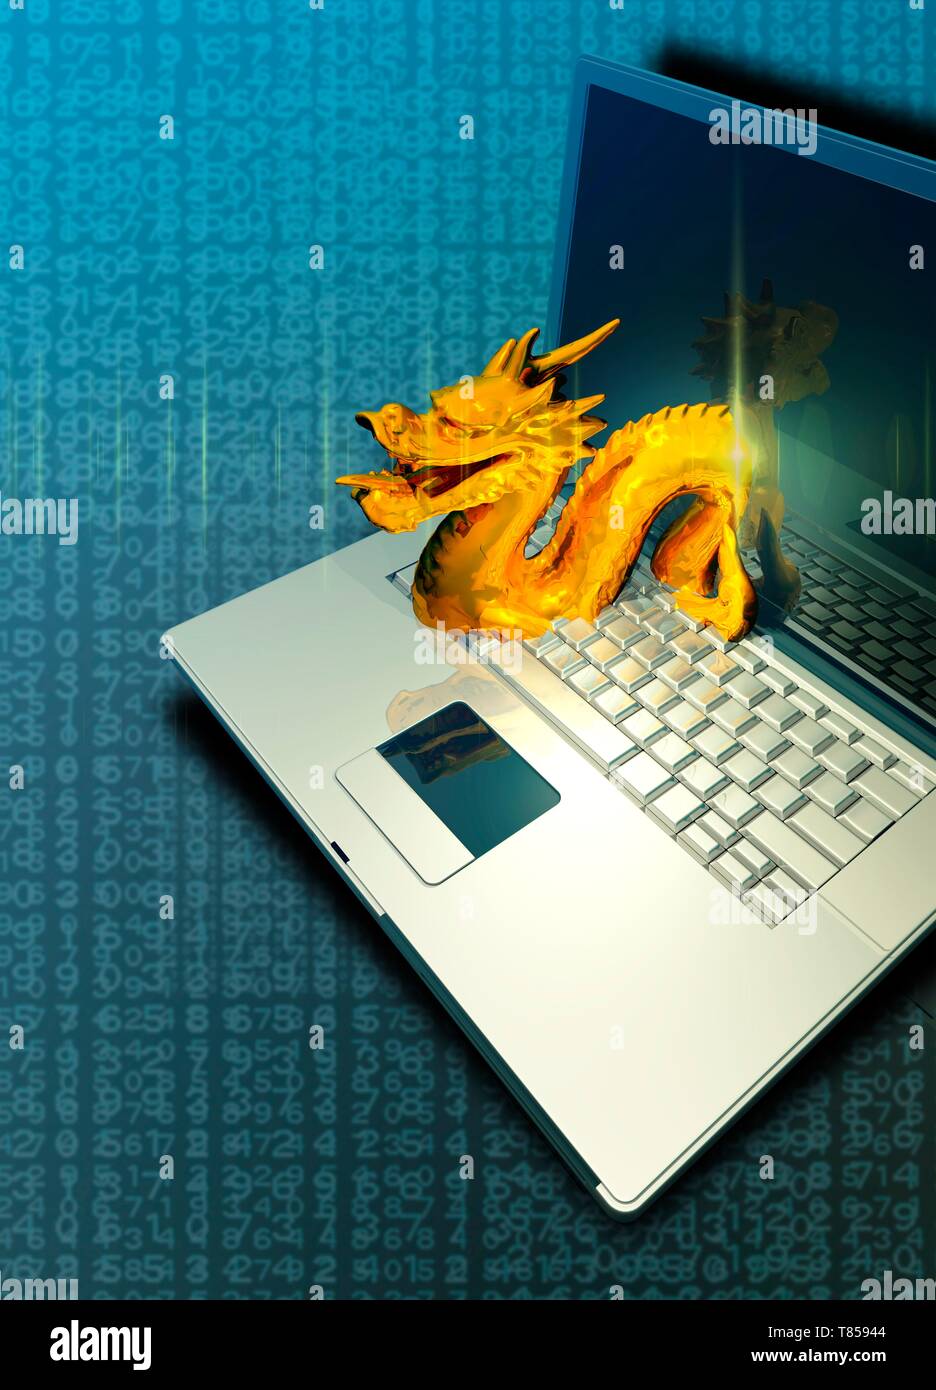 Chinese computer hacking, illustration Stock Photo